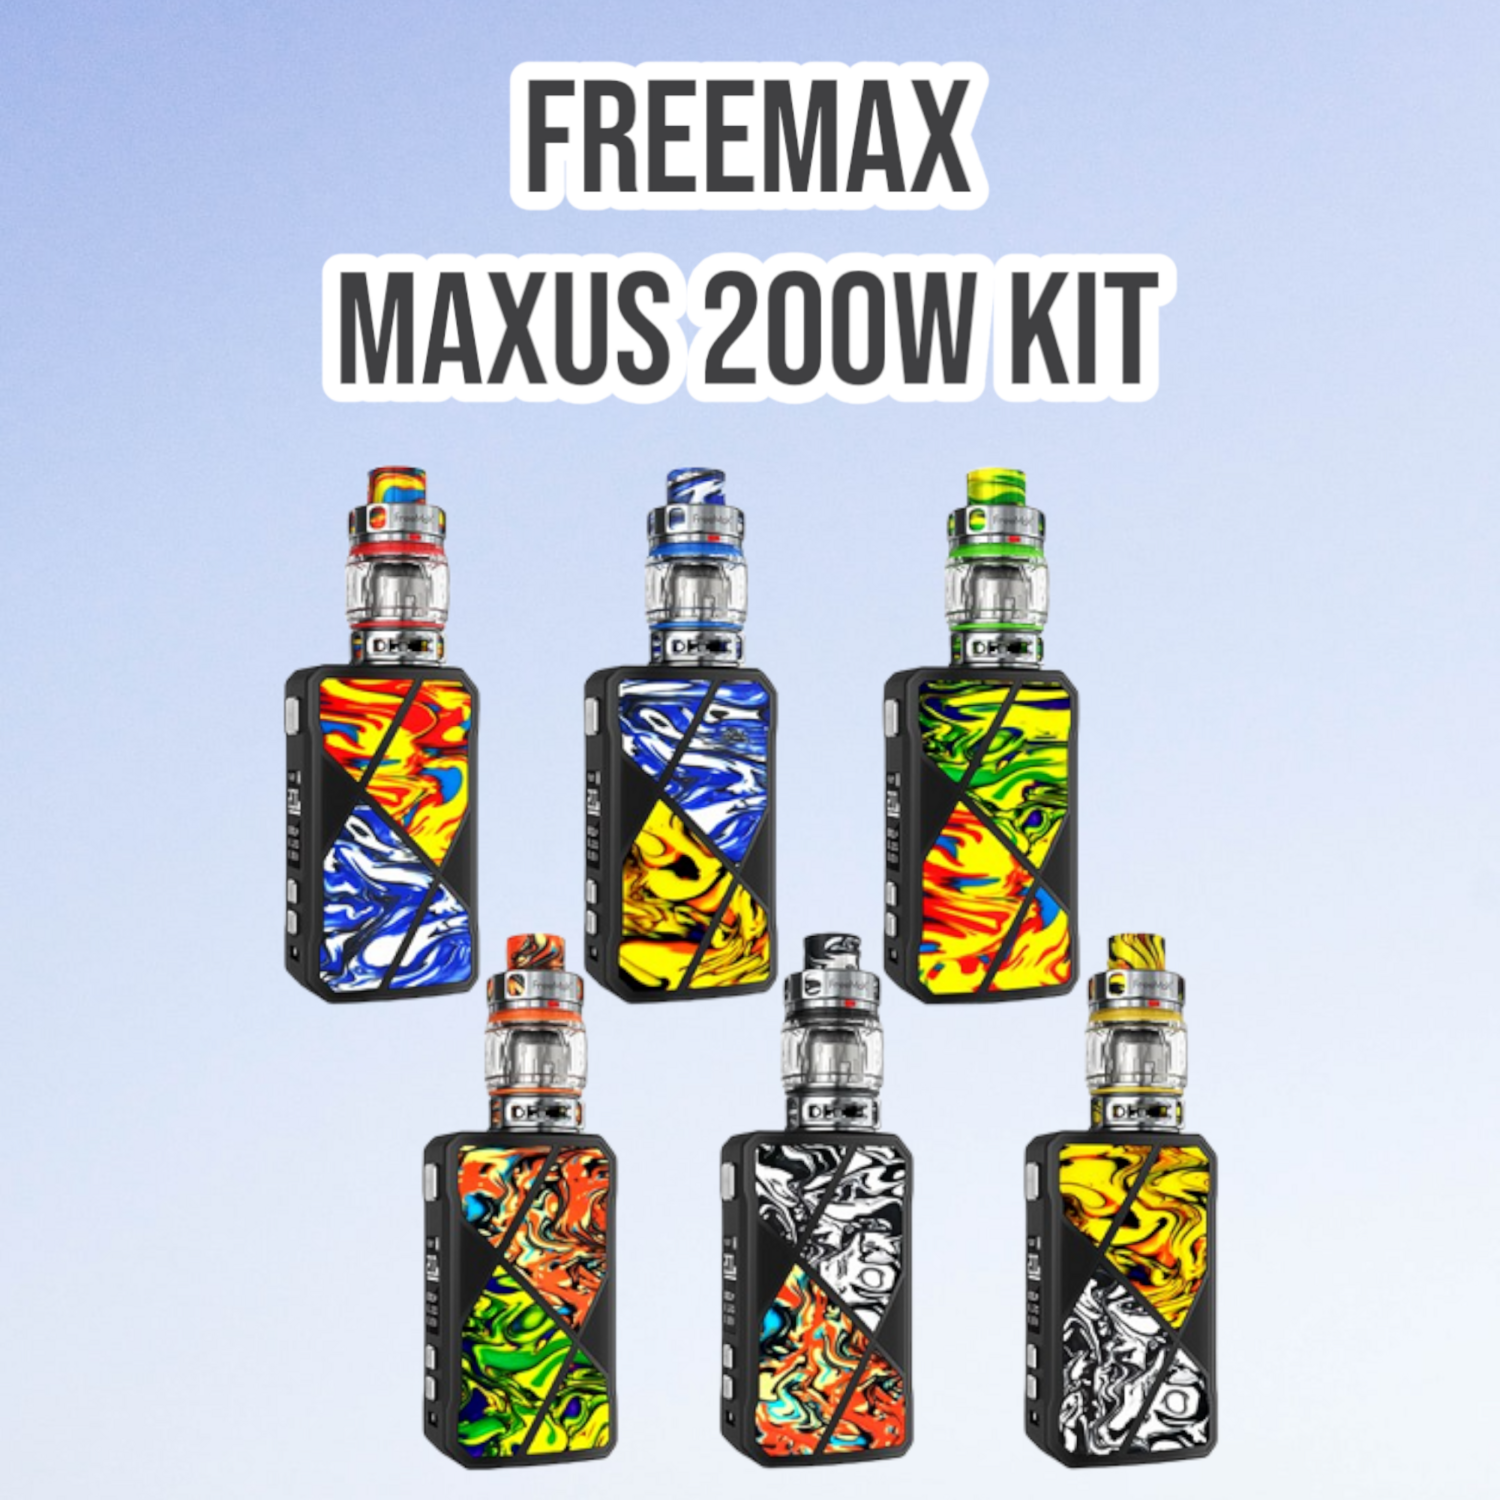 Freemax Maxus 200w Kit